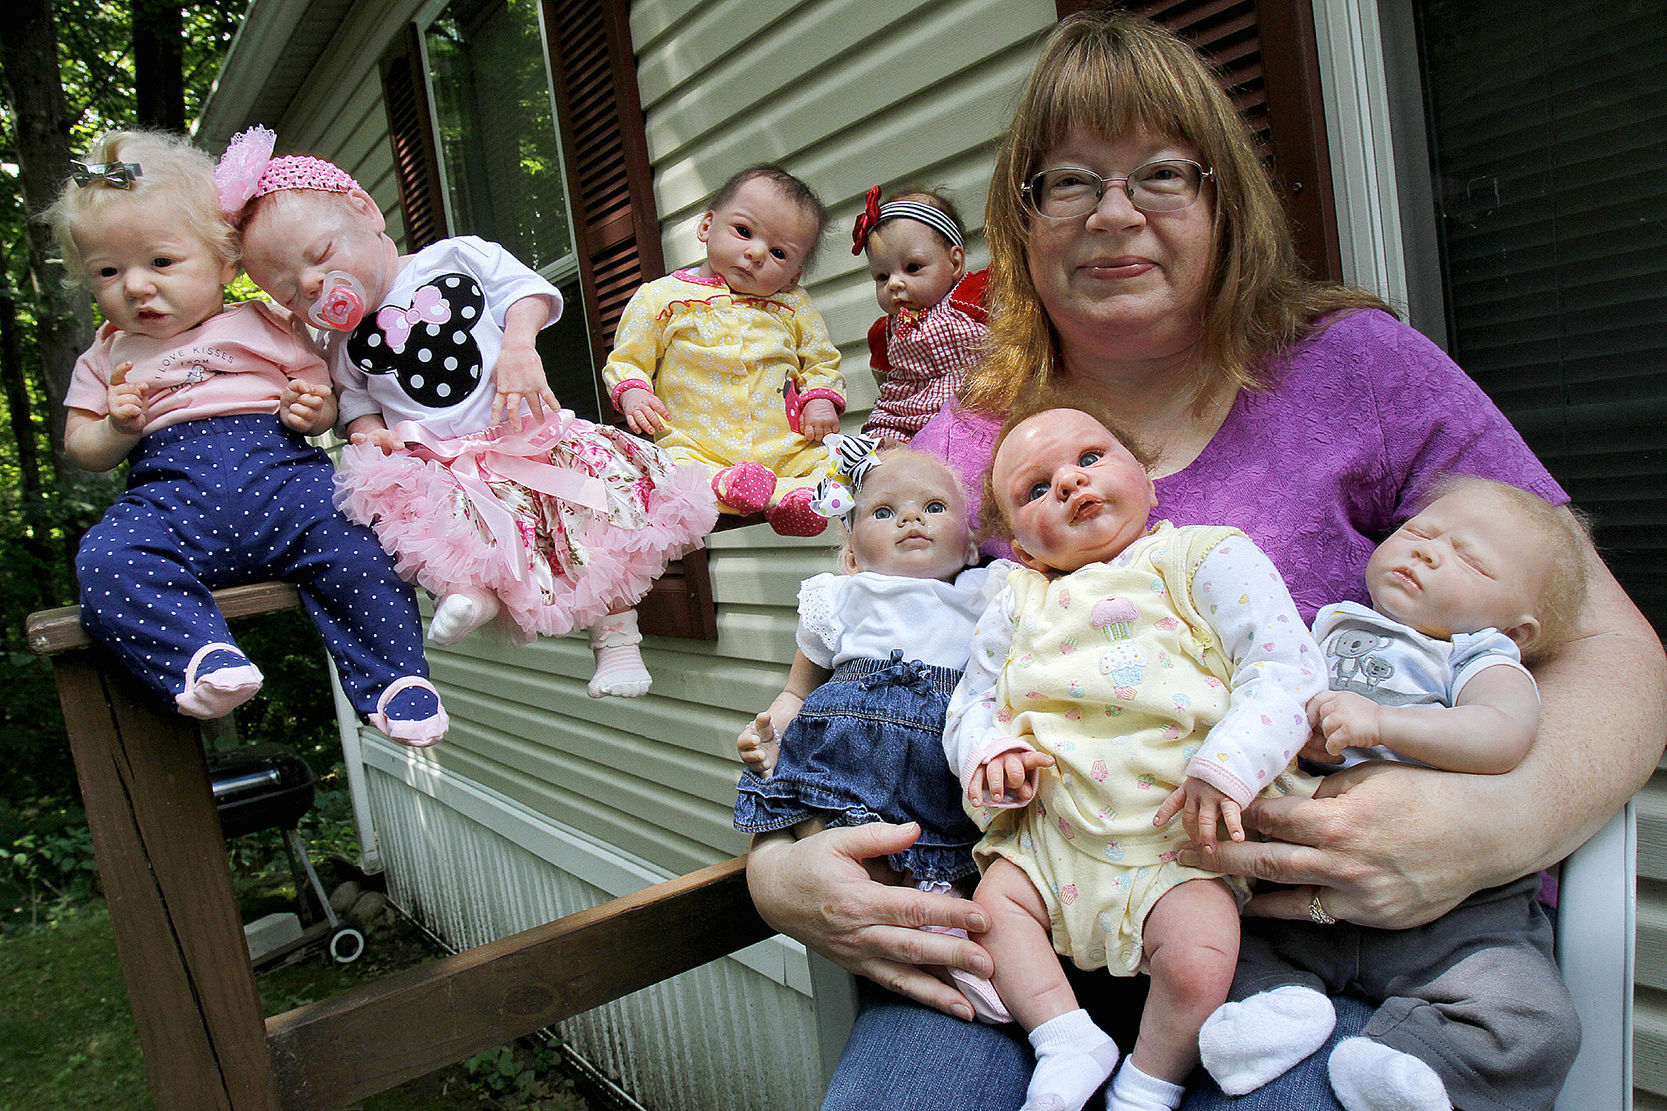 amazon reborn dolls under 100 dollars